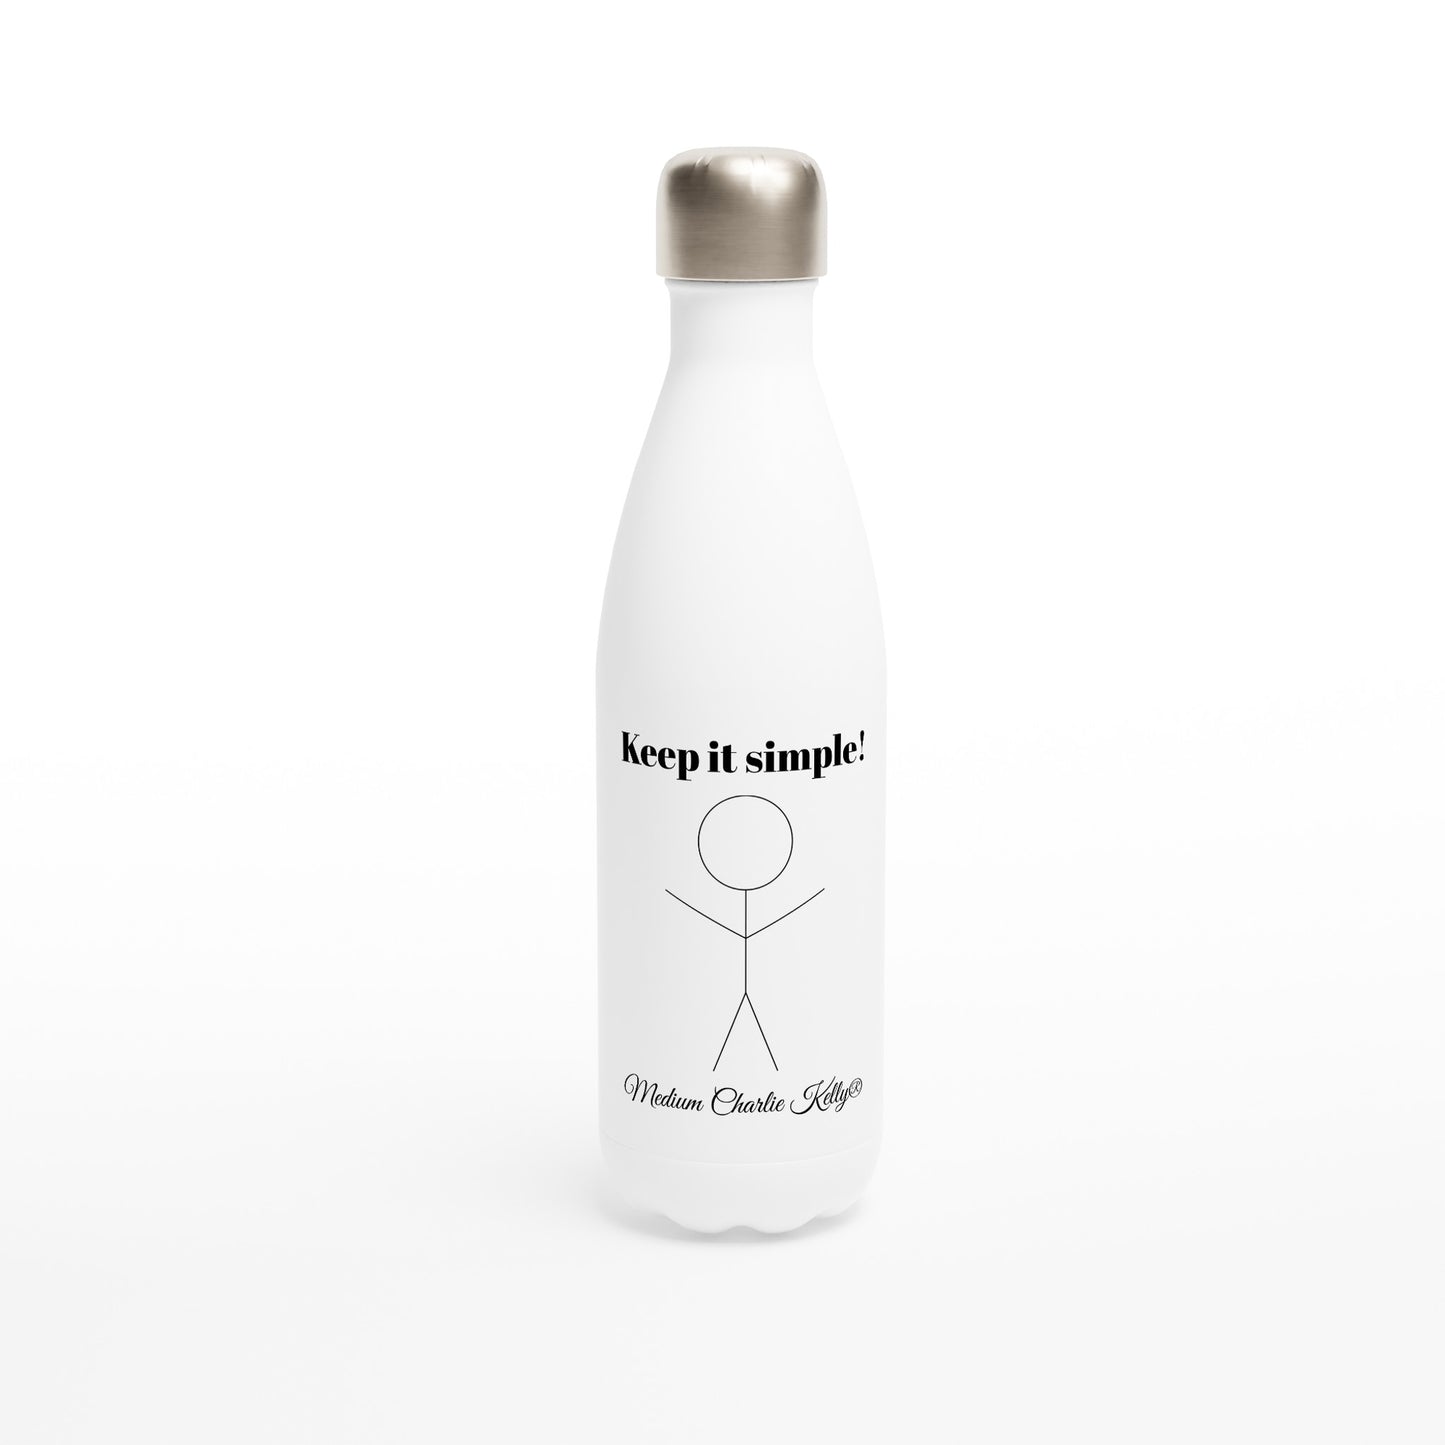 Keep it simple! Stainless Steel Water Bottle